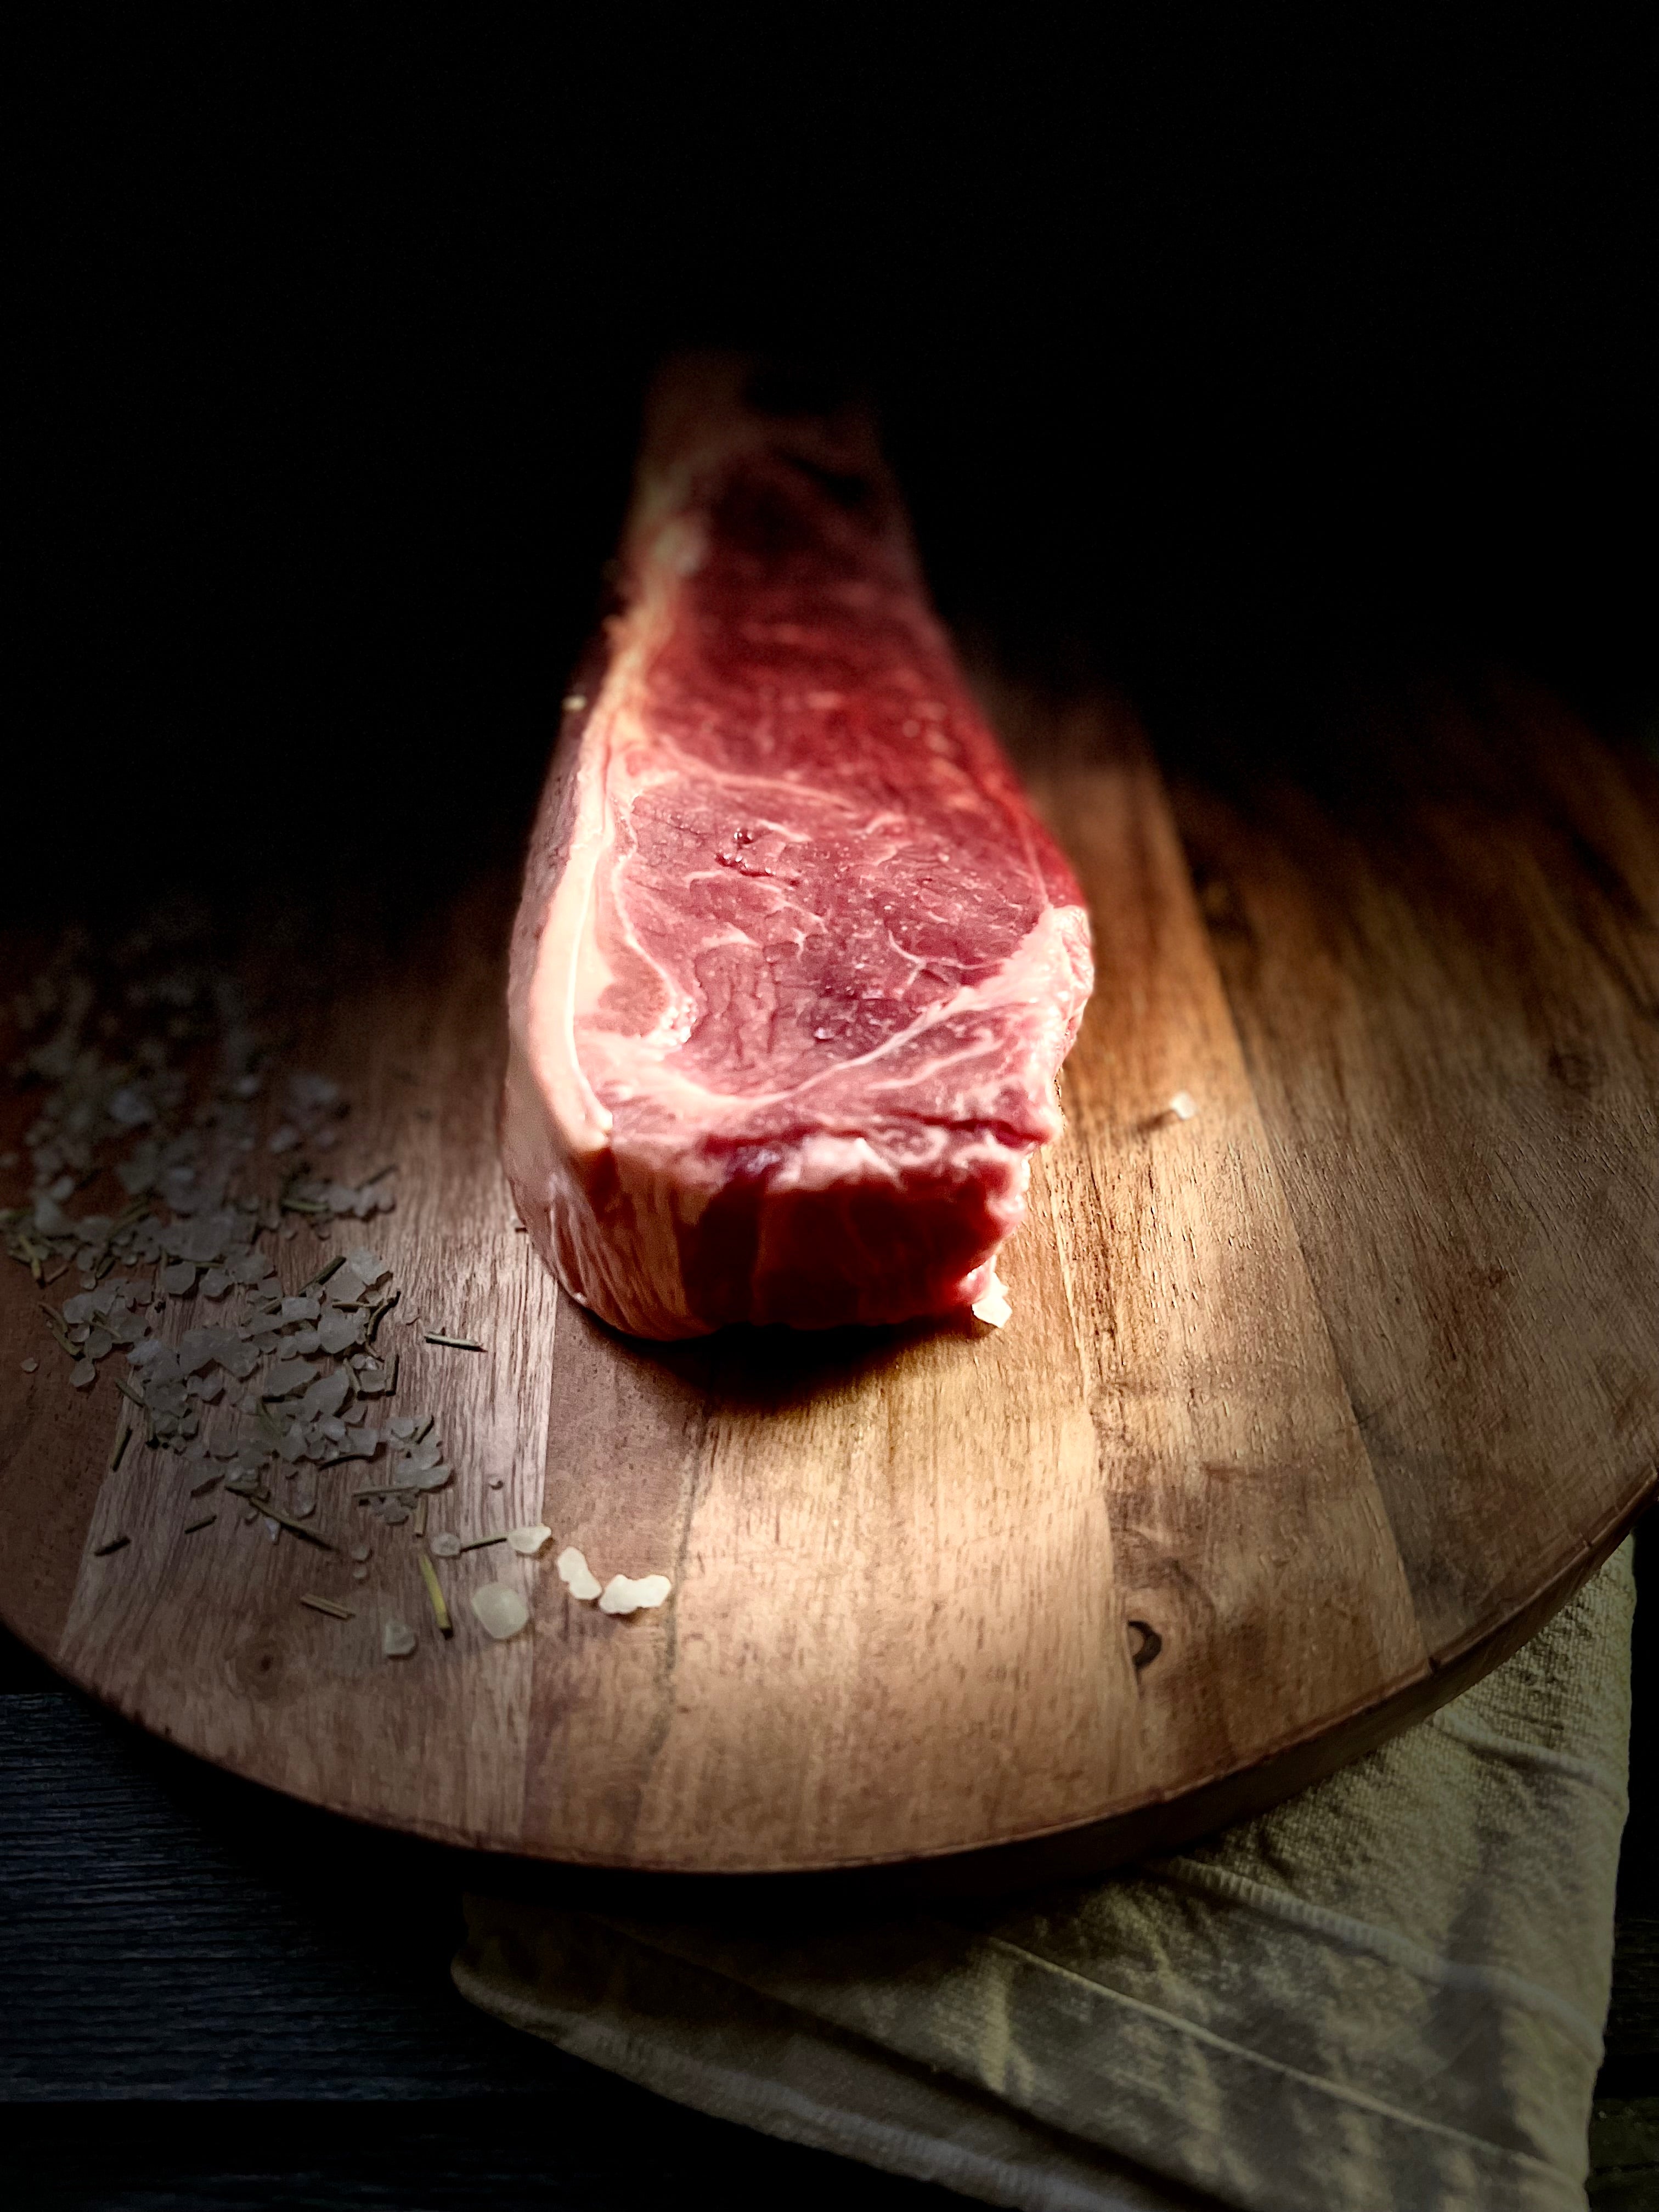 CCM raw NY Strip steak on a round cutting board with herbs